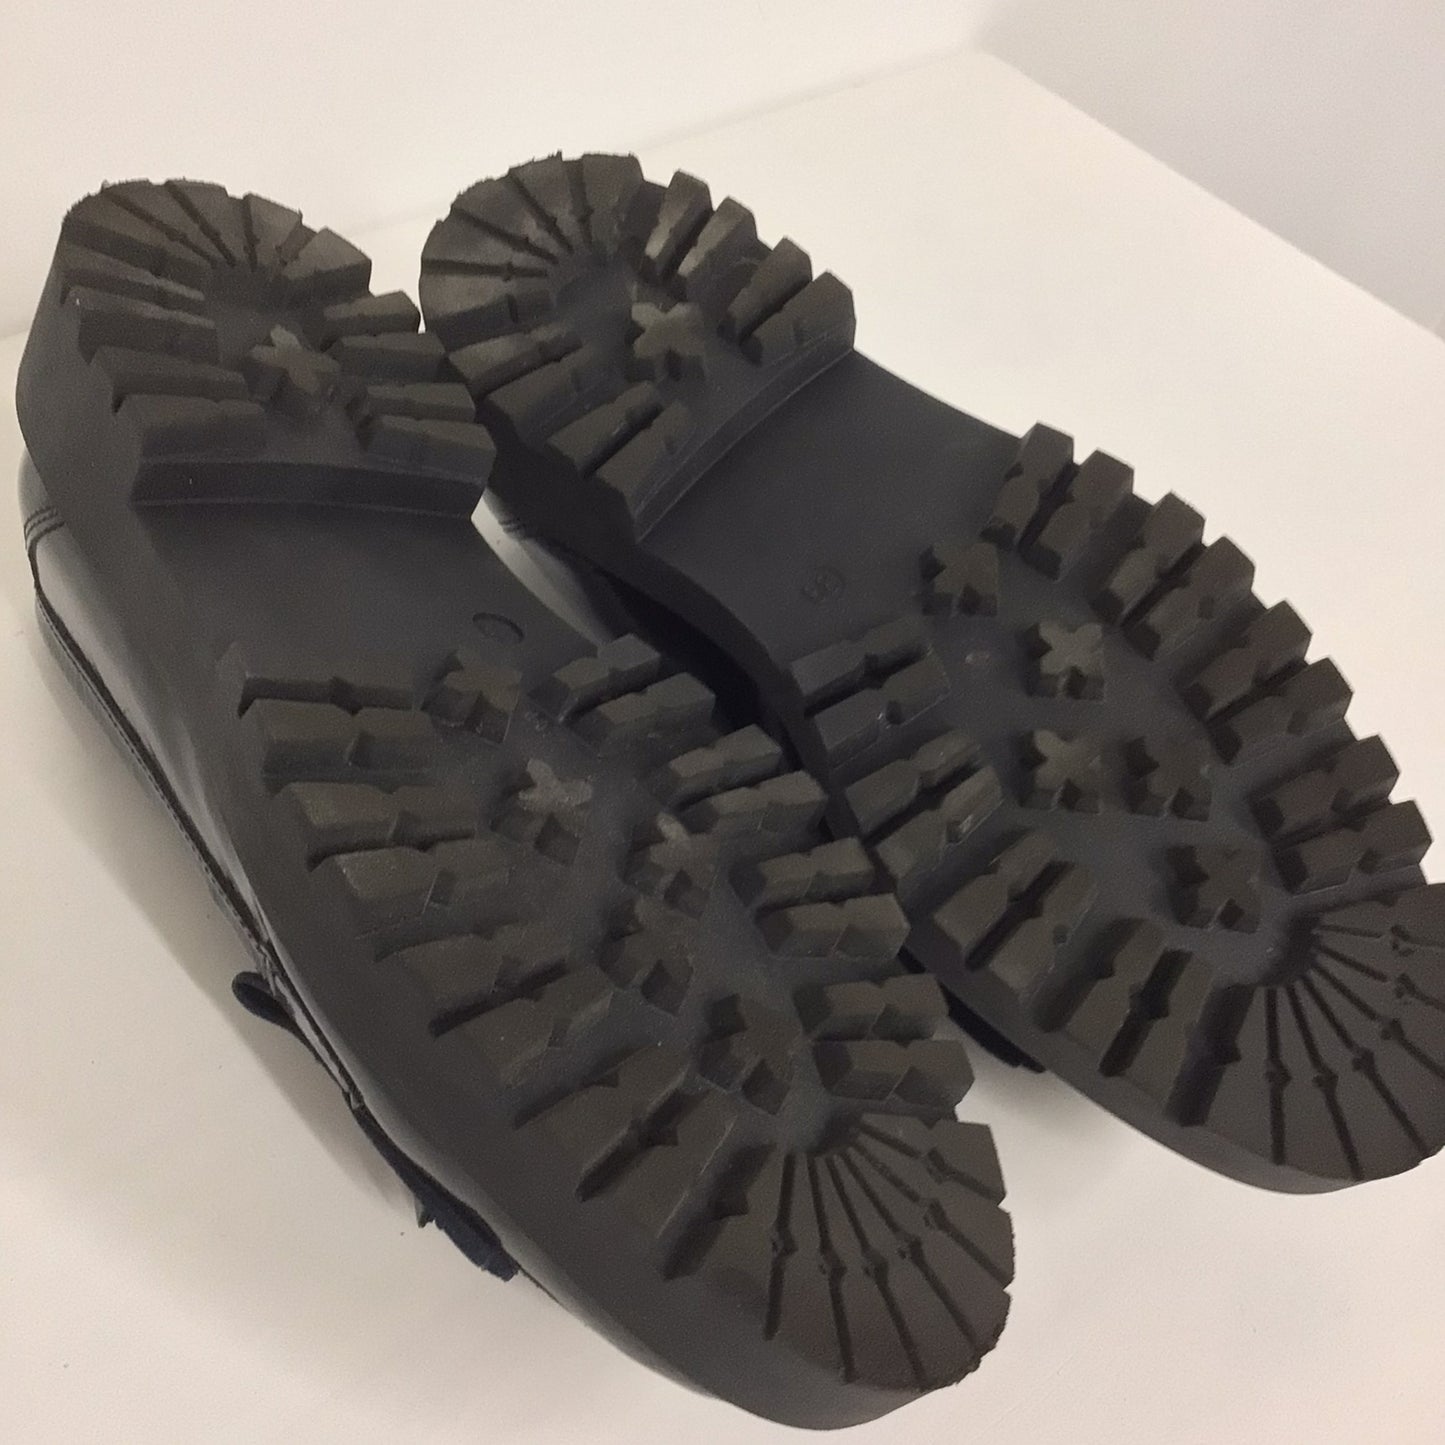 Kurt Geiger London Black Patent Leather Chunky Loafers Size 6